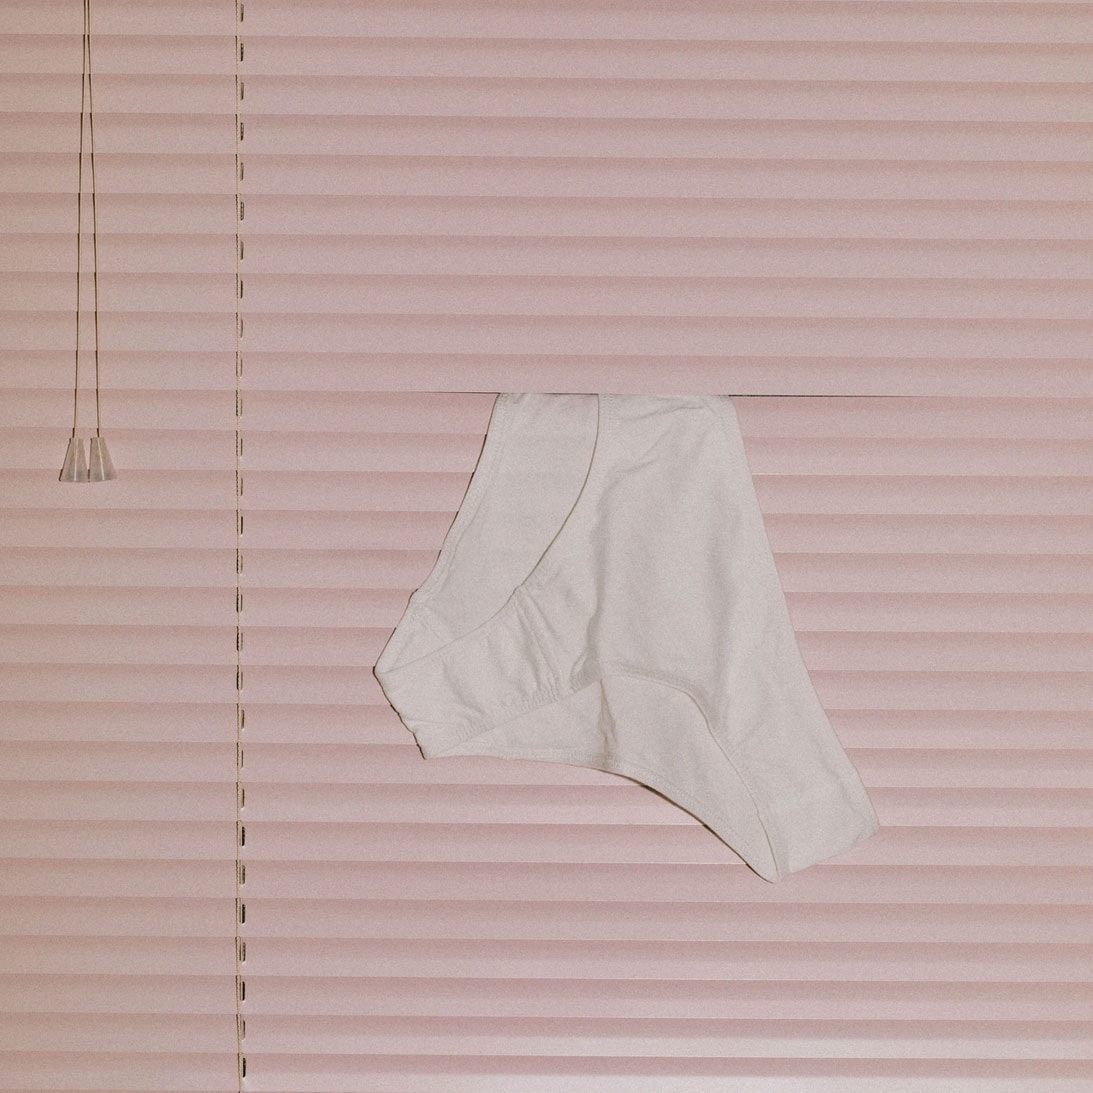 kent compostable underwear sustainability panties window blinds